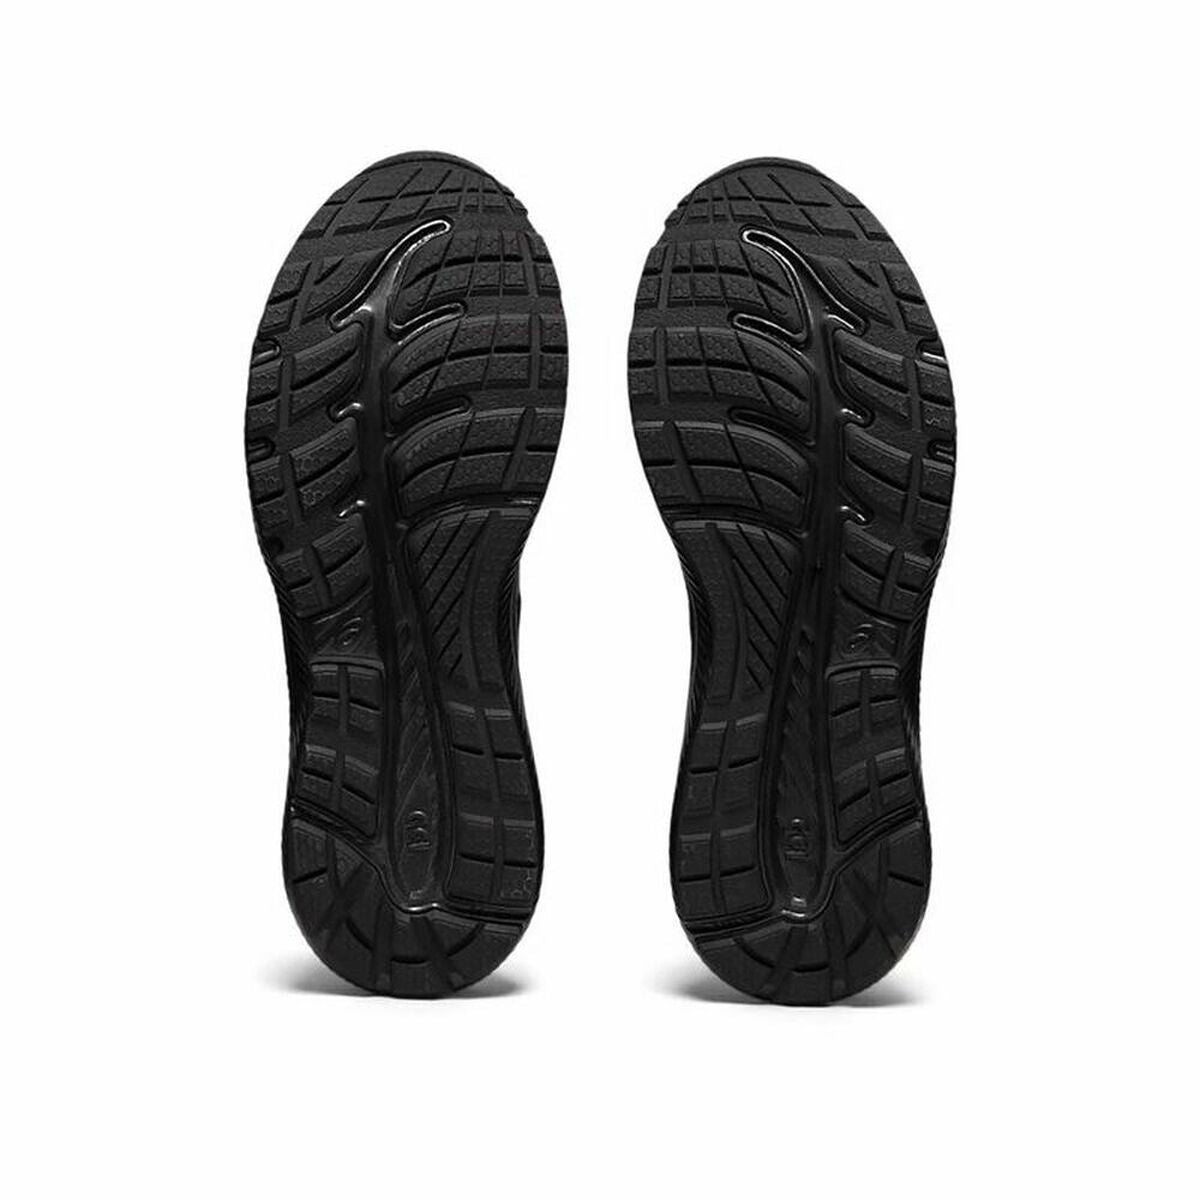 Chaussures de Running pour Adultes Asics GEL-Contend SL M Noir (40.5) - Asics - Jardin D'Eyden - jardindeyden.fr